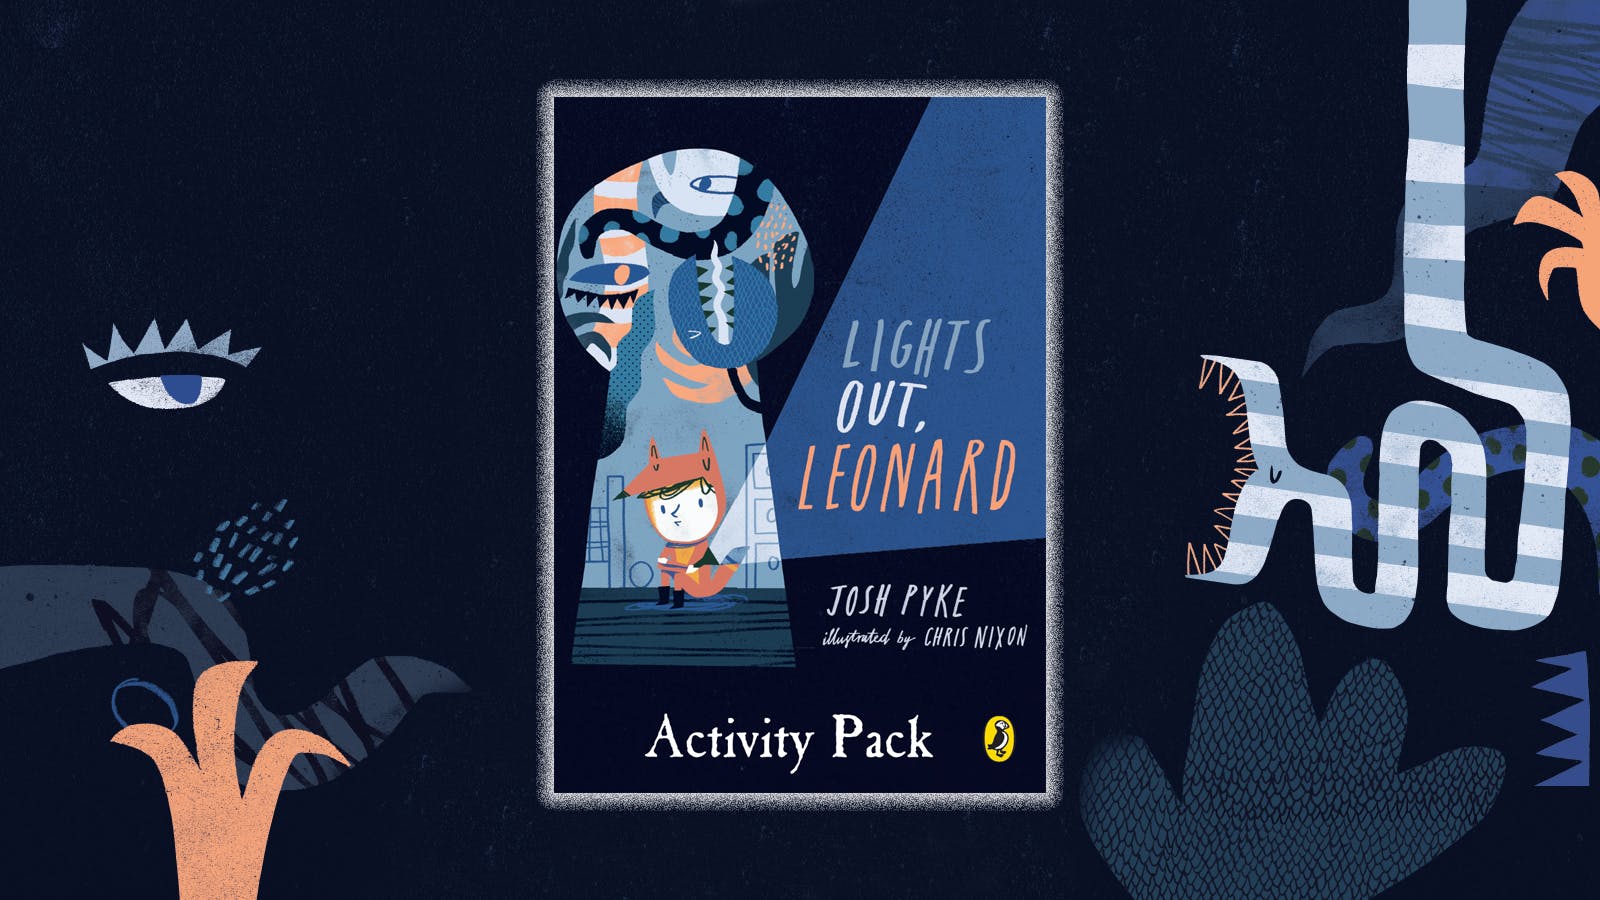 Lights Out, Leonard activity pack